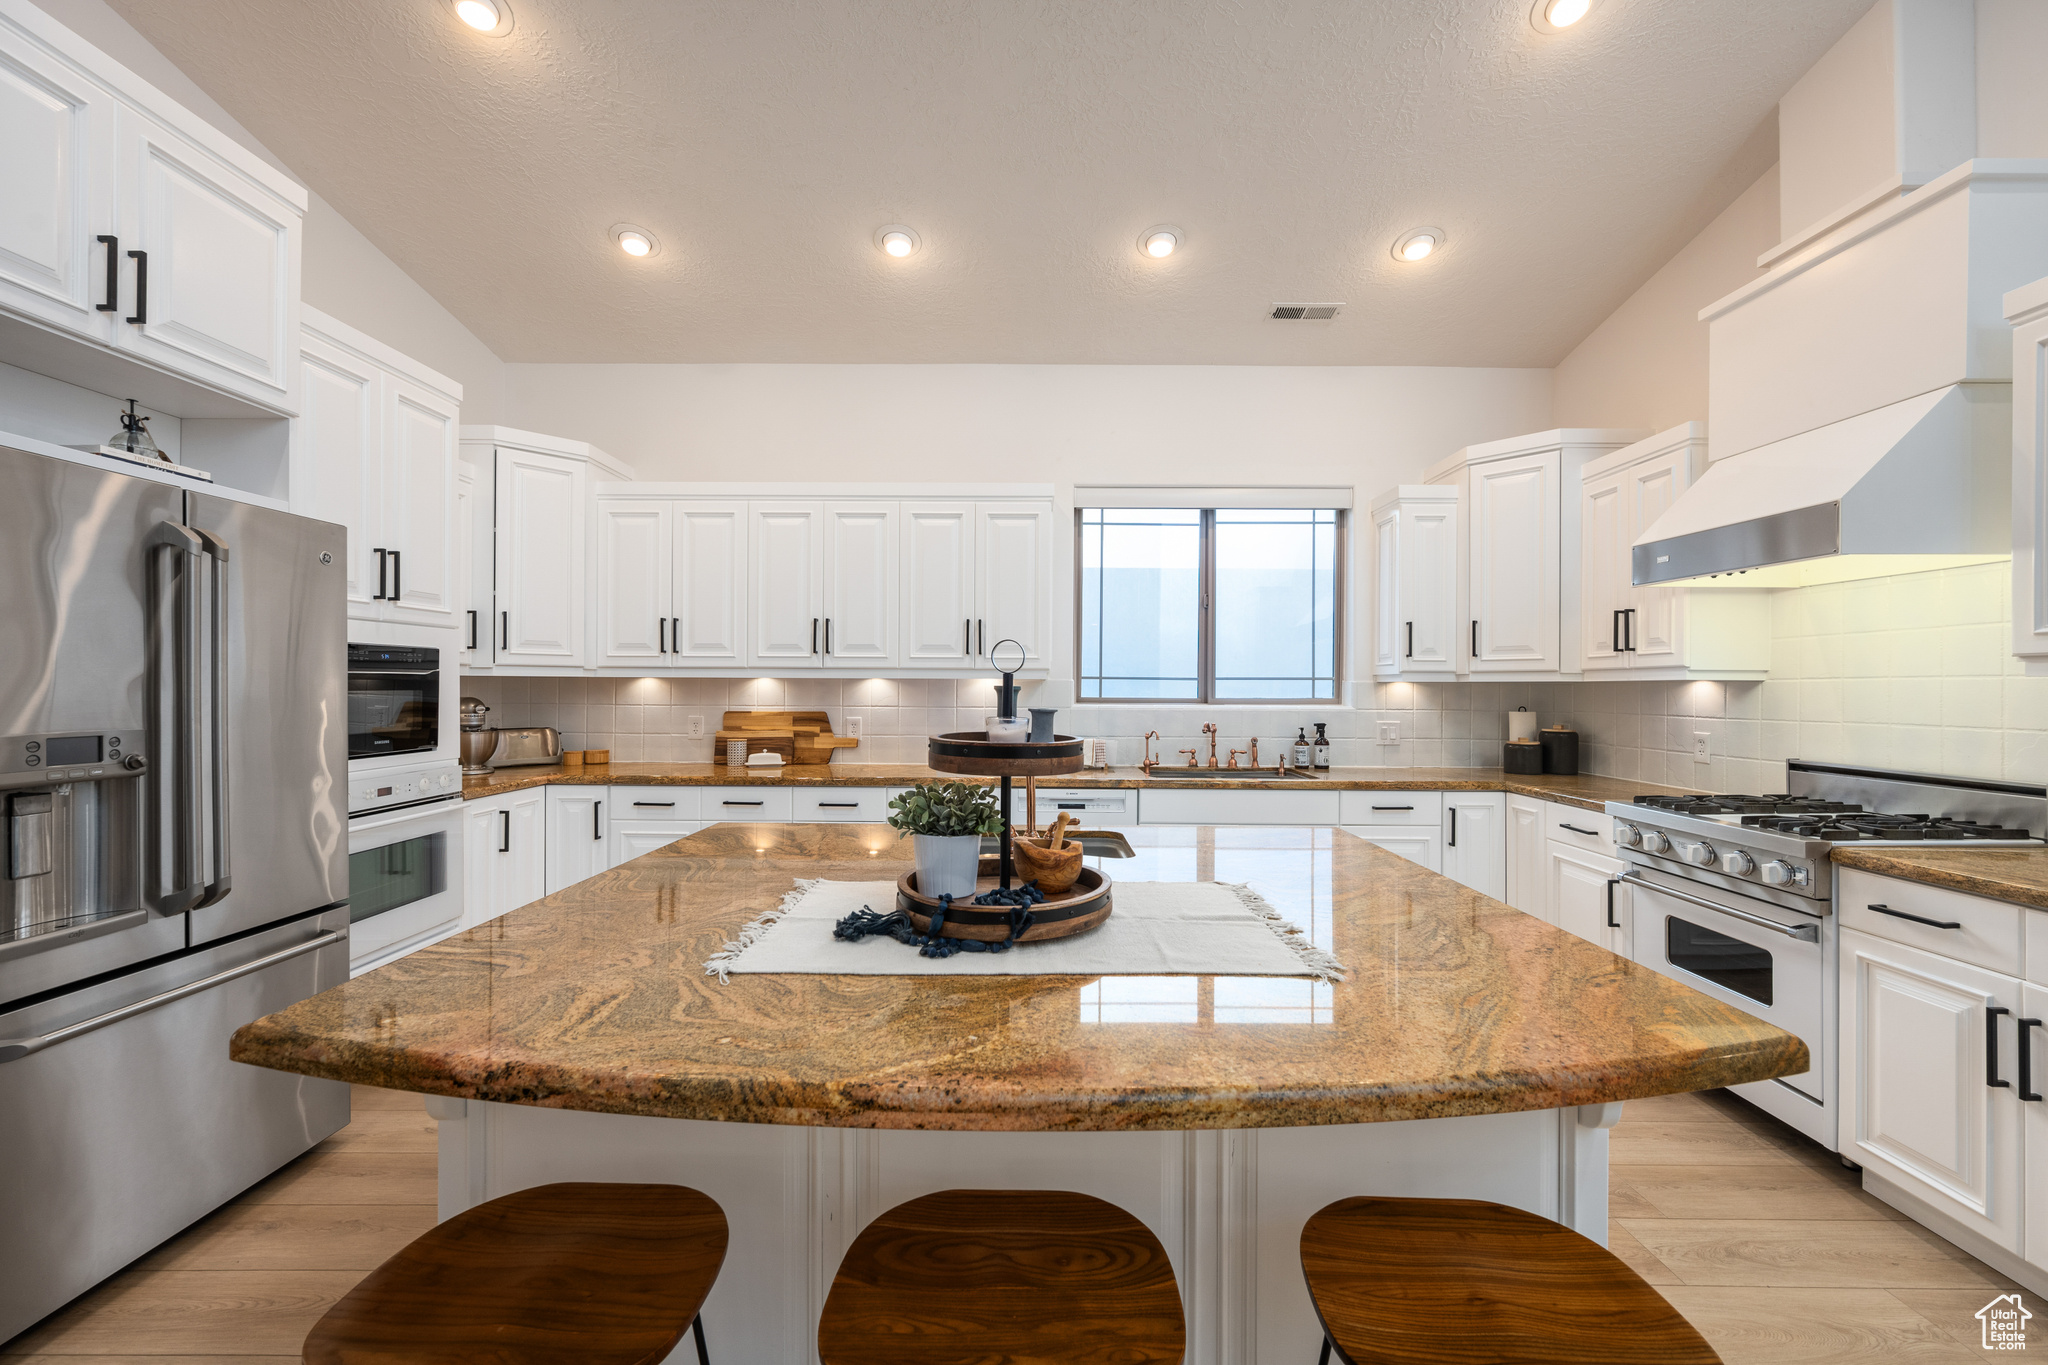 Kitchen featuring premium appliances, a center island, backsplash, and a breakfast bar area